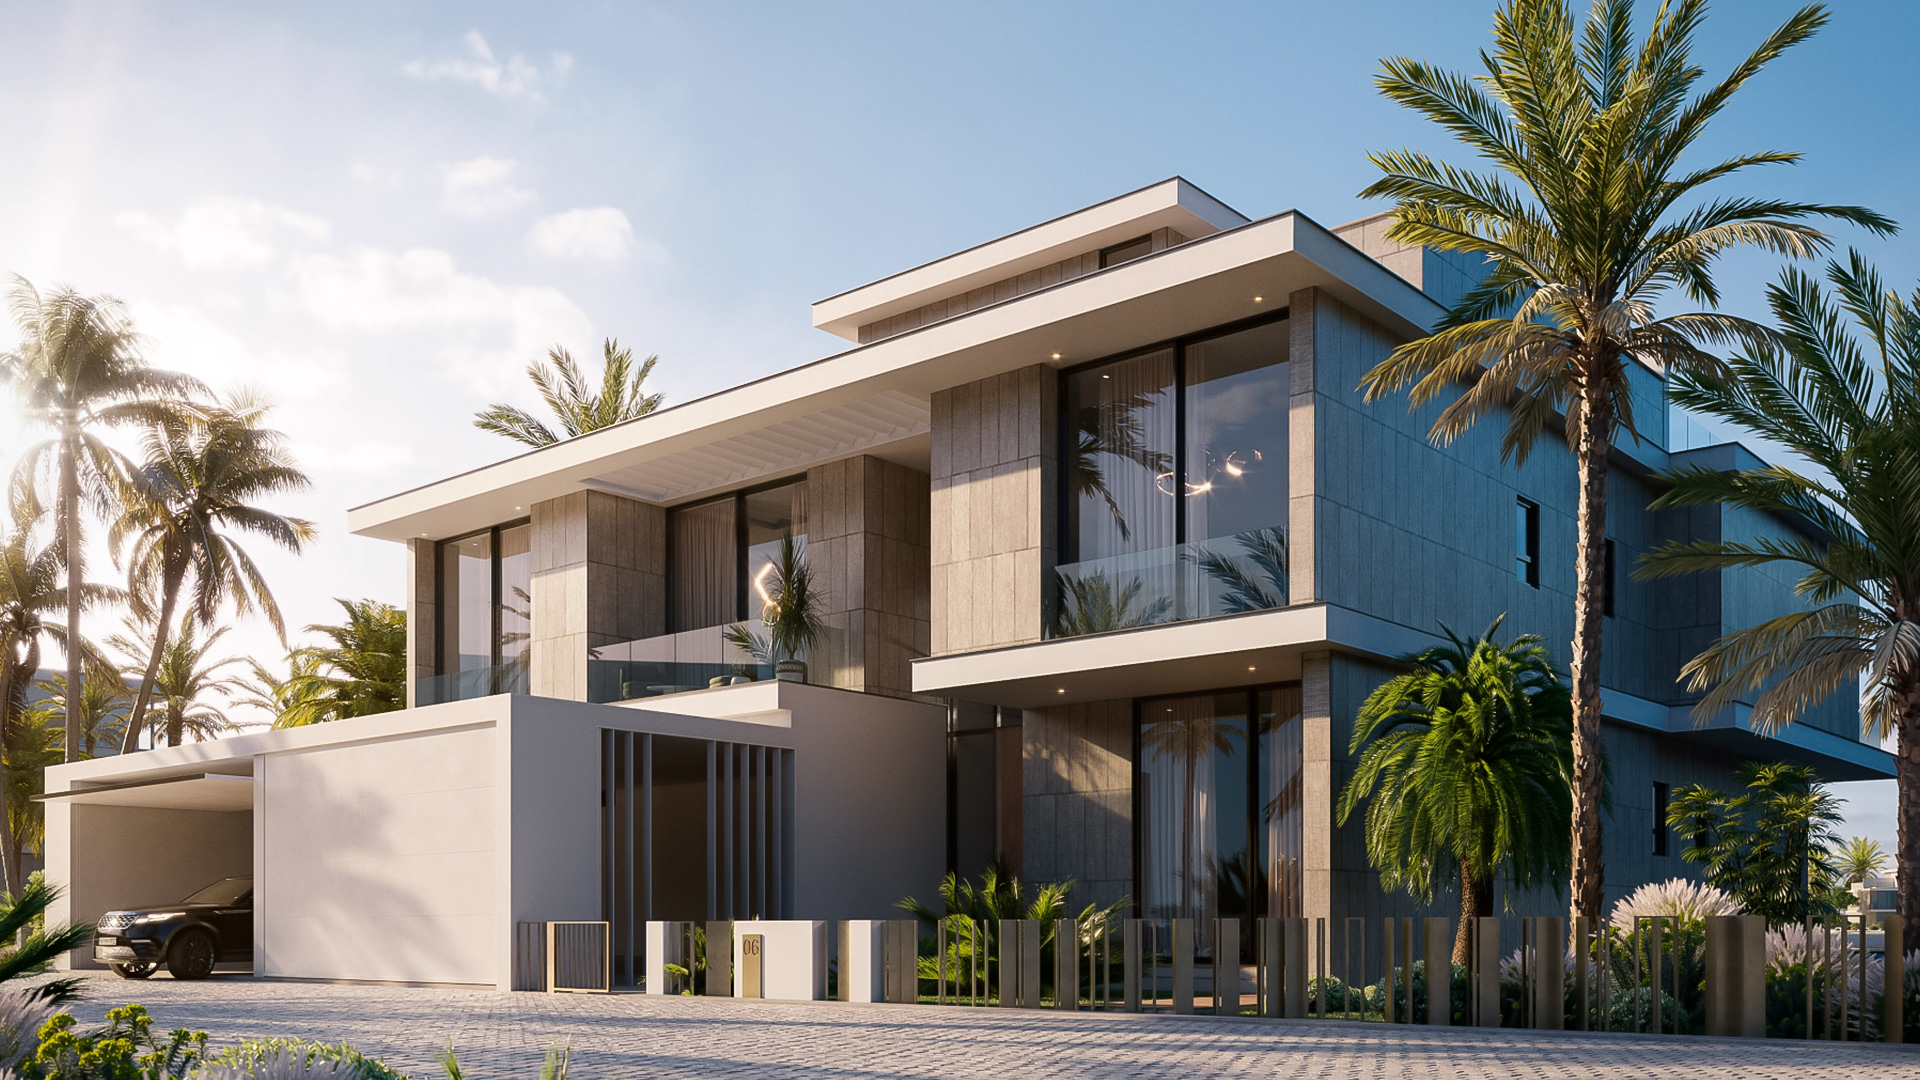 Vivenda para venda em Mohammed Bin Rashid City, Dubai, EAU 7 divisões, 1672 m². № 27738 - foto 1